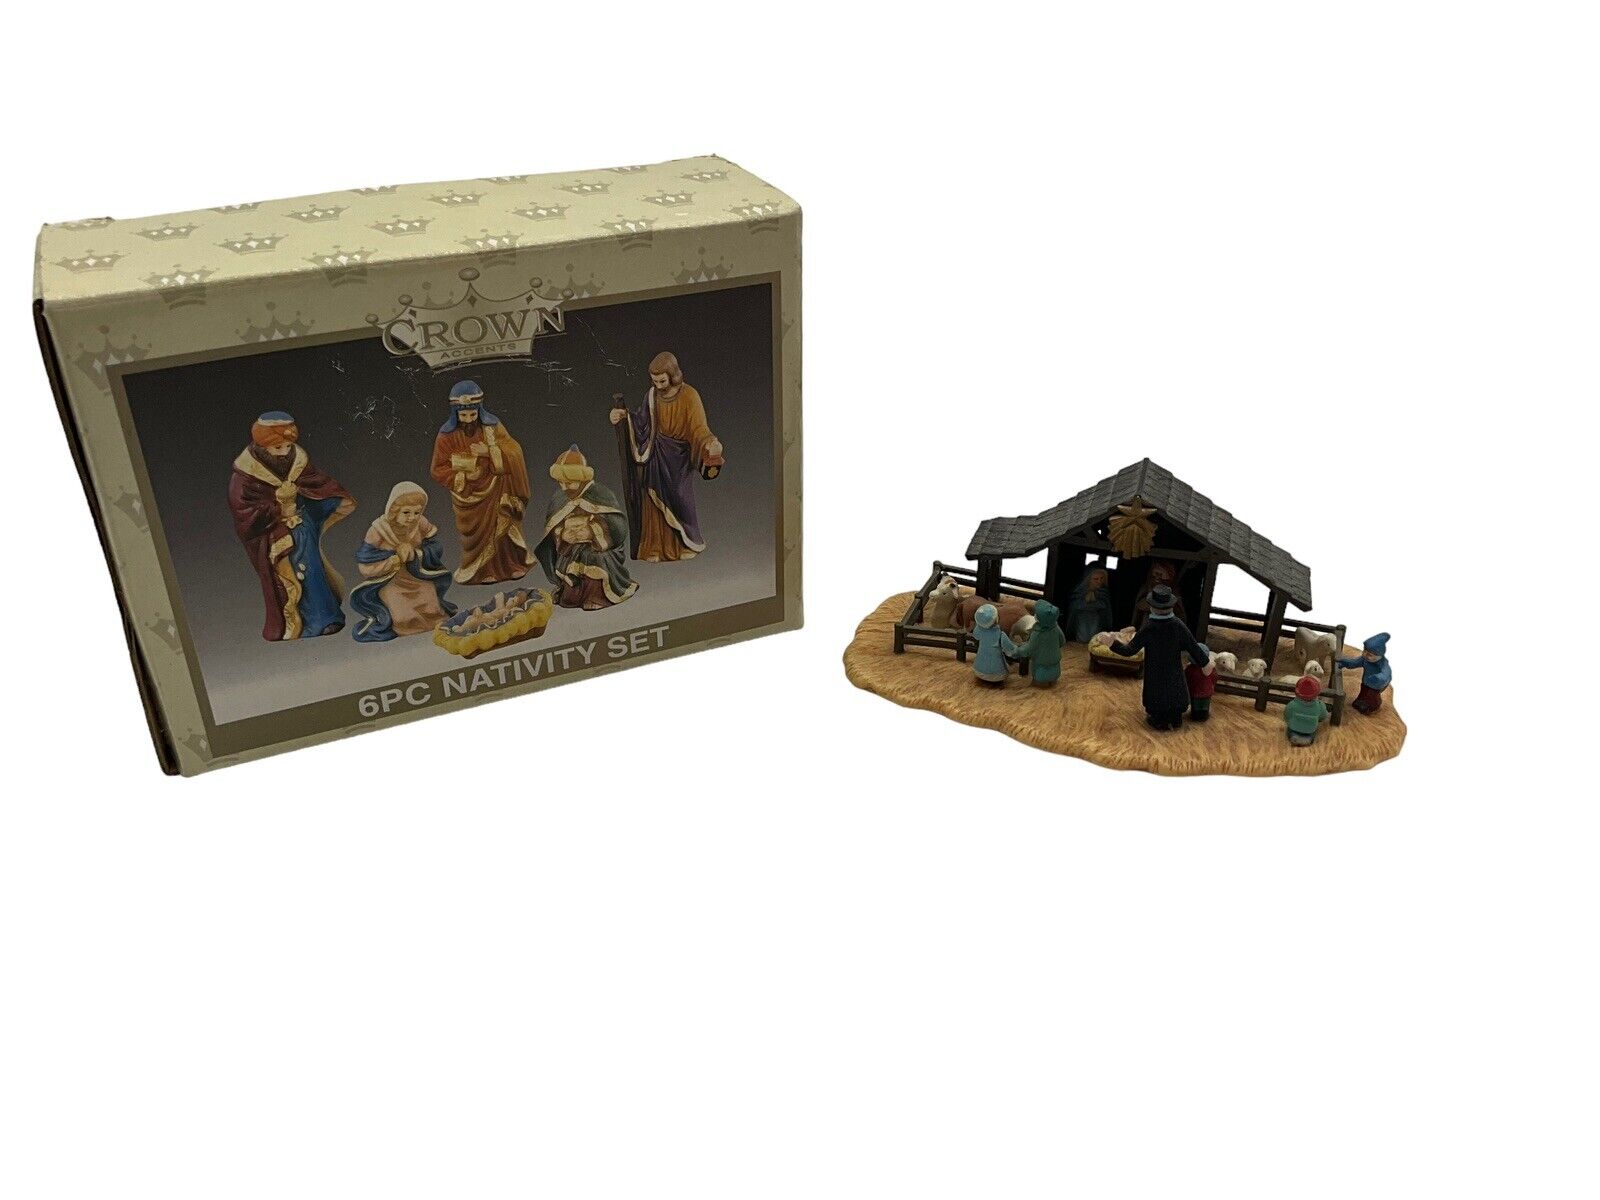 Lot of 2 Vintage Miniature Nativity Sets Christmas Decor MCM Holiday decor